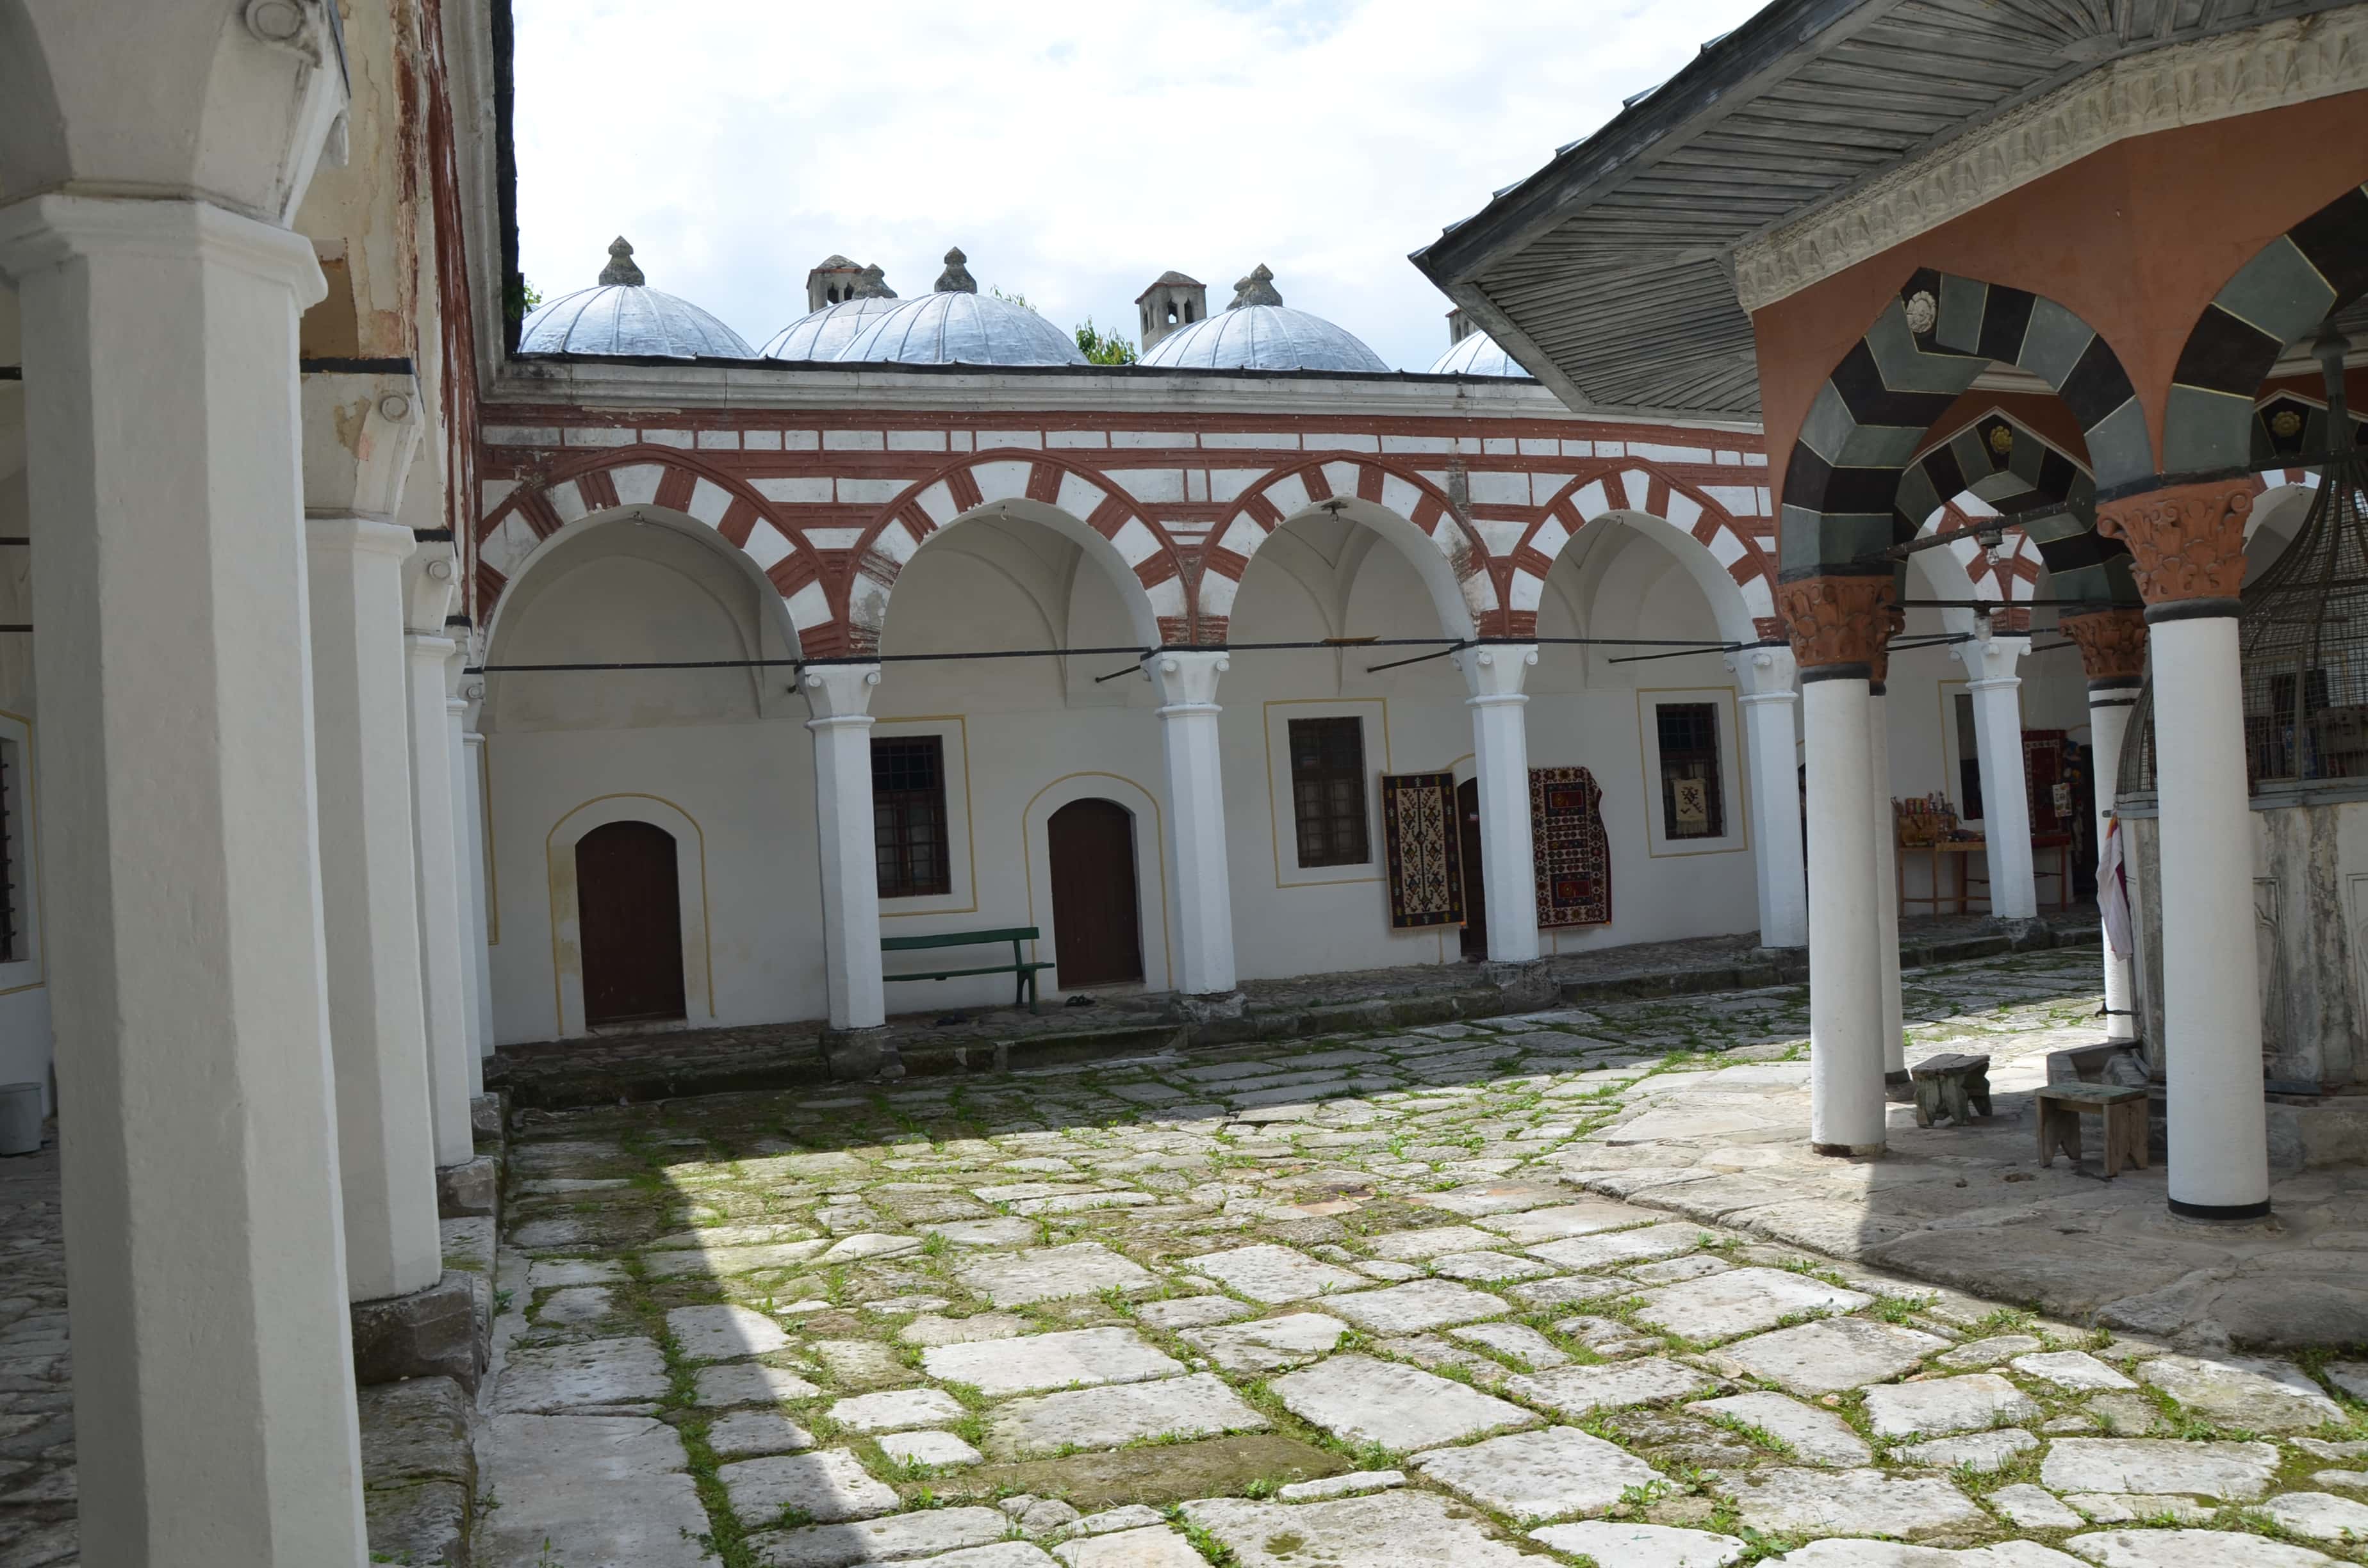 Courtyard of the Tombul Mosque in Shumen, Bulgaria